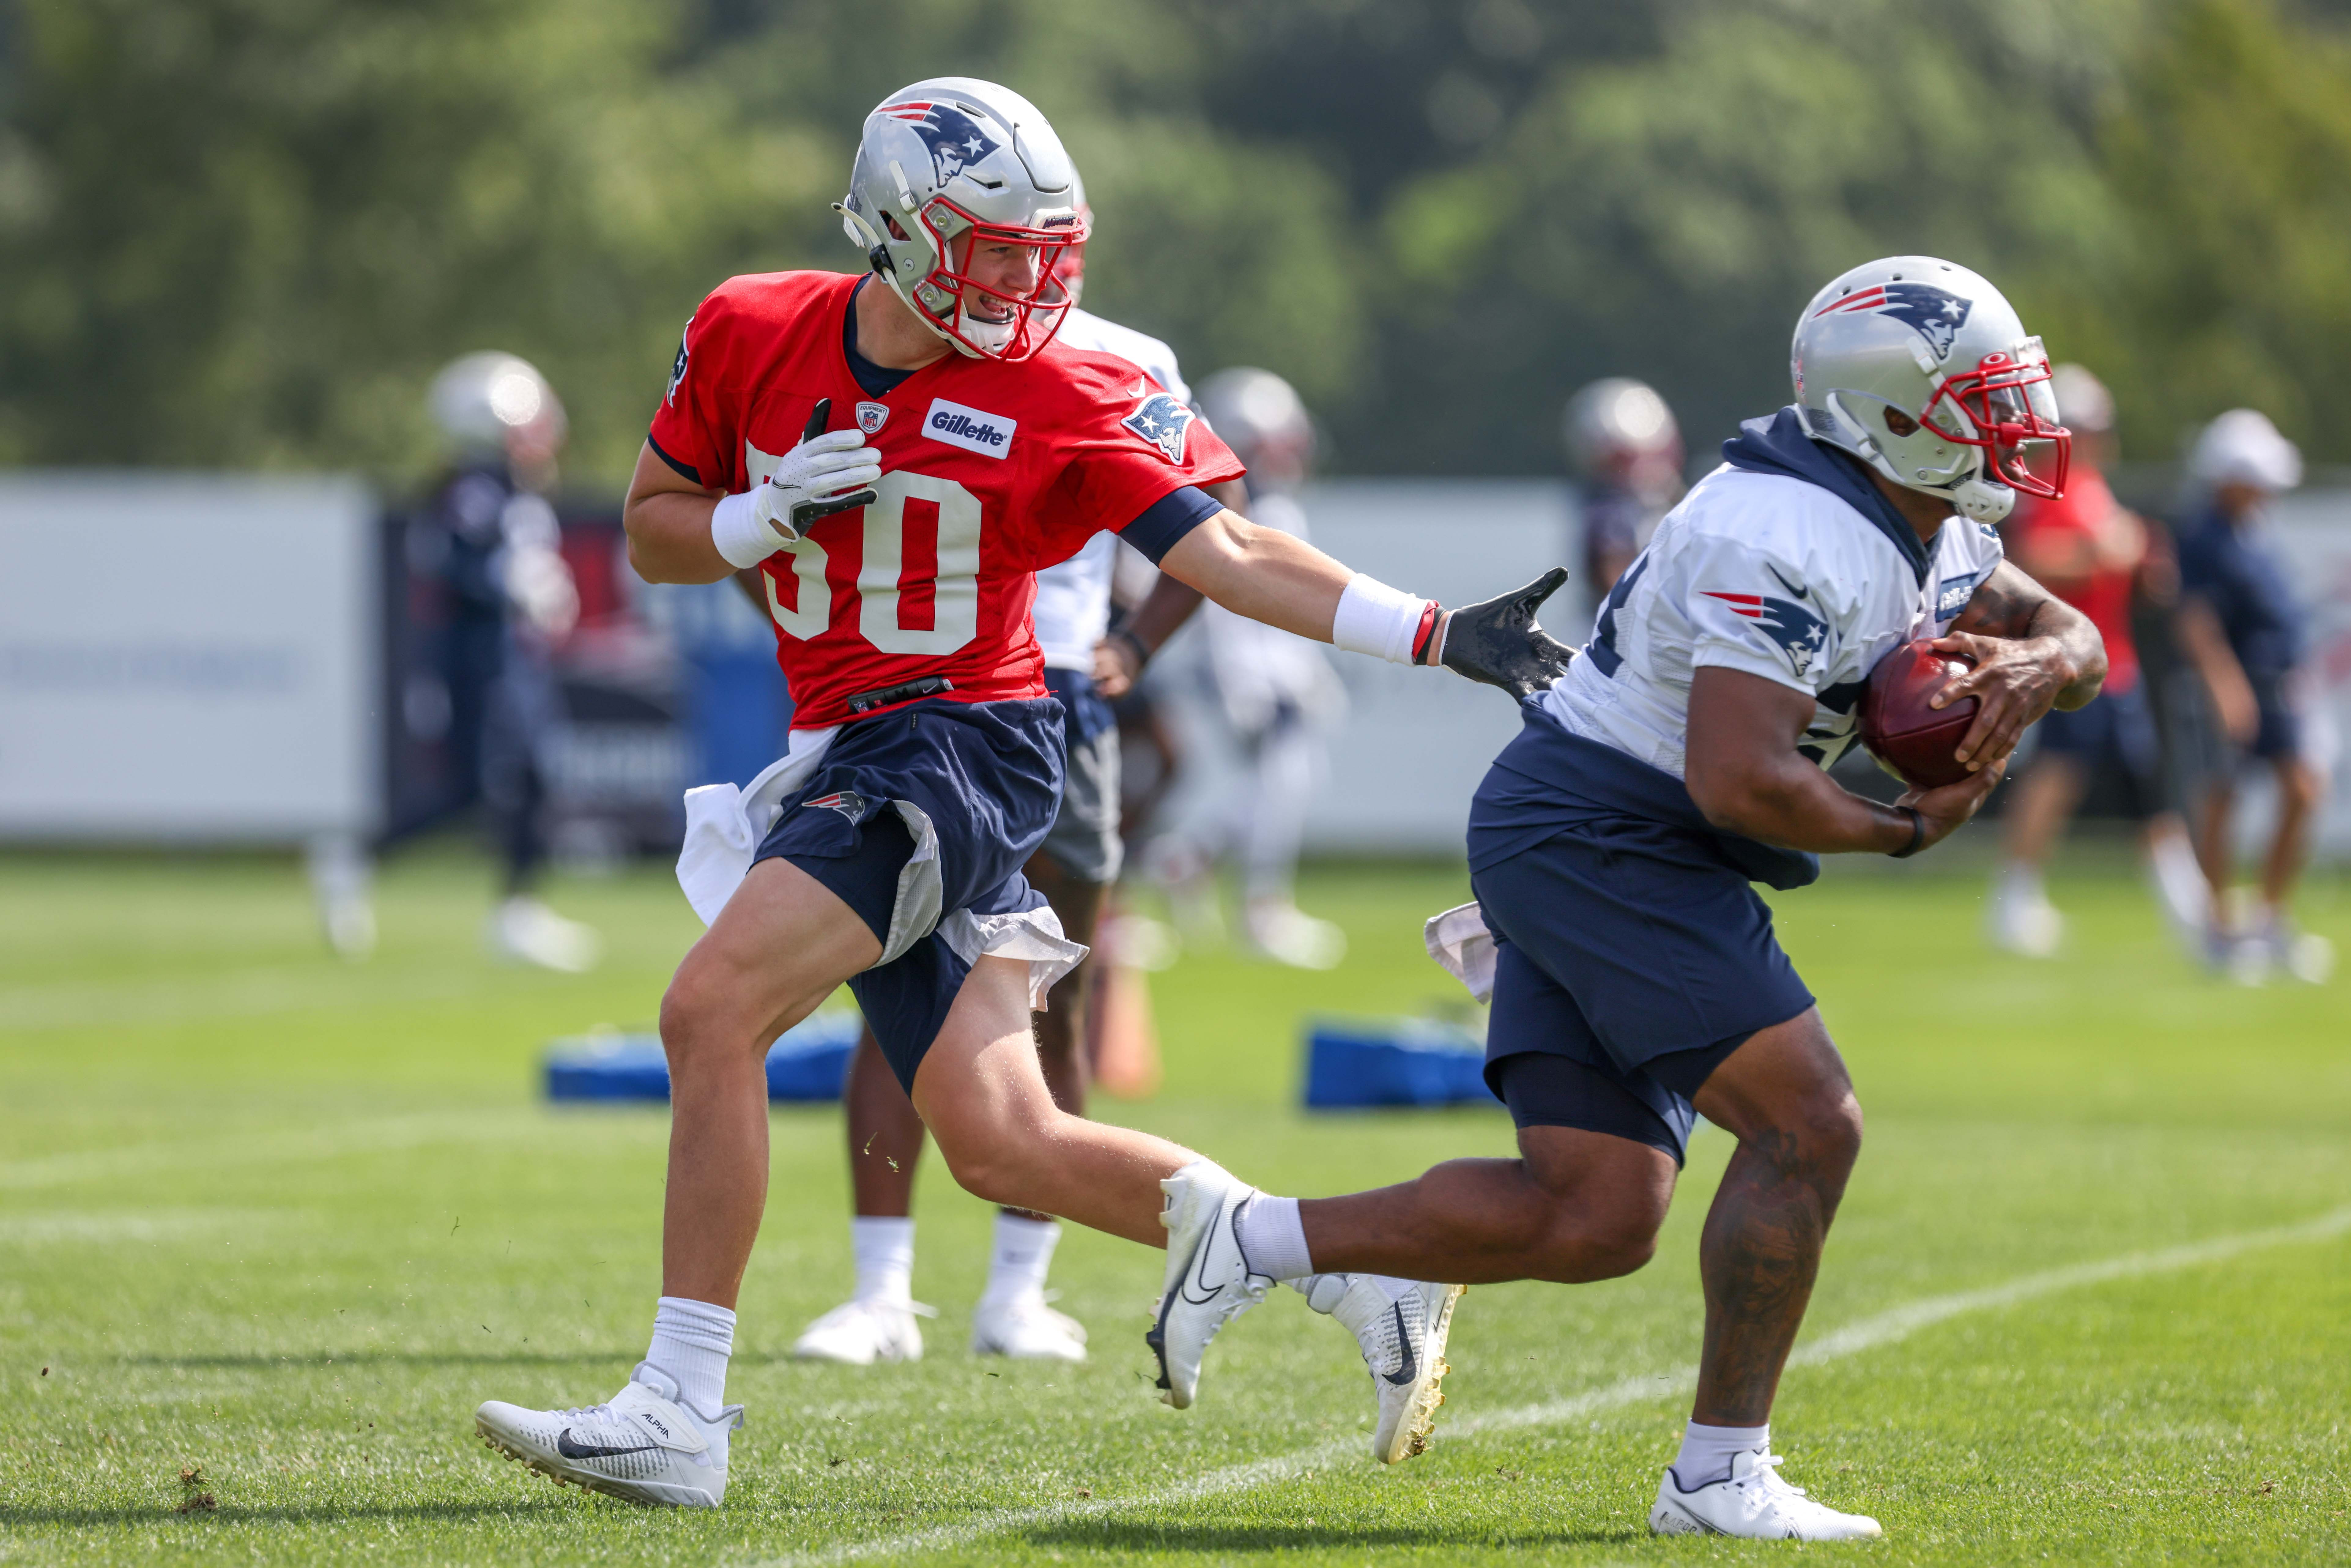 NFL: New England Patriots Training Camp